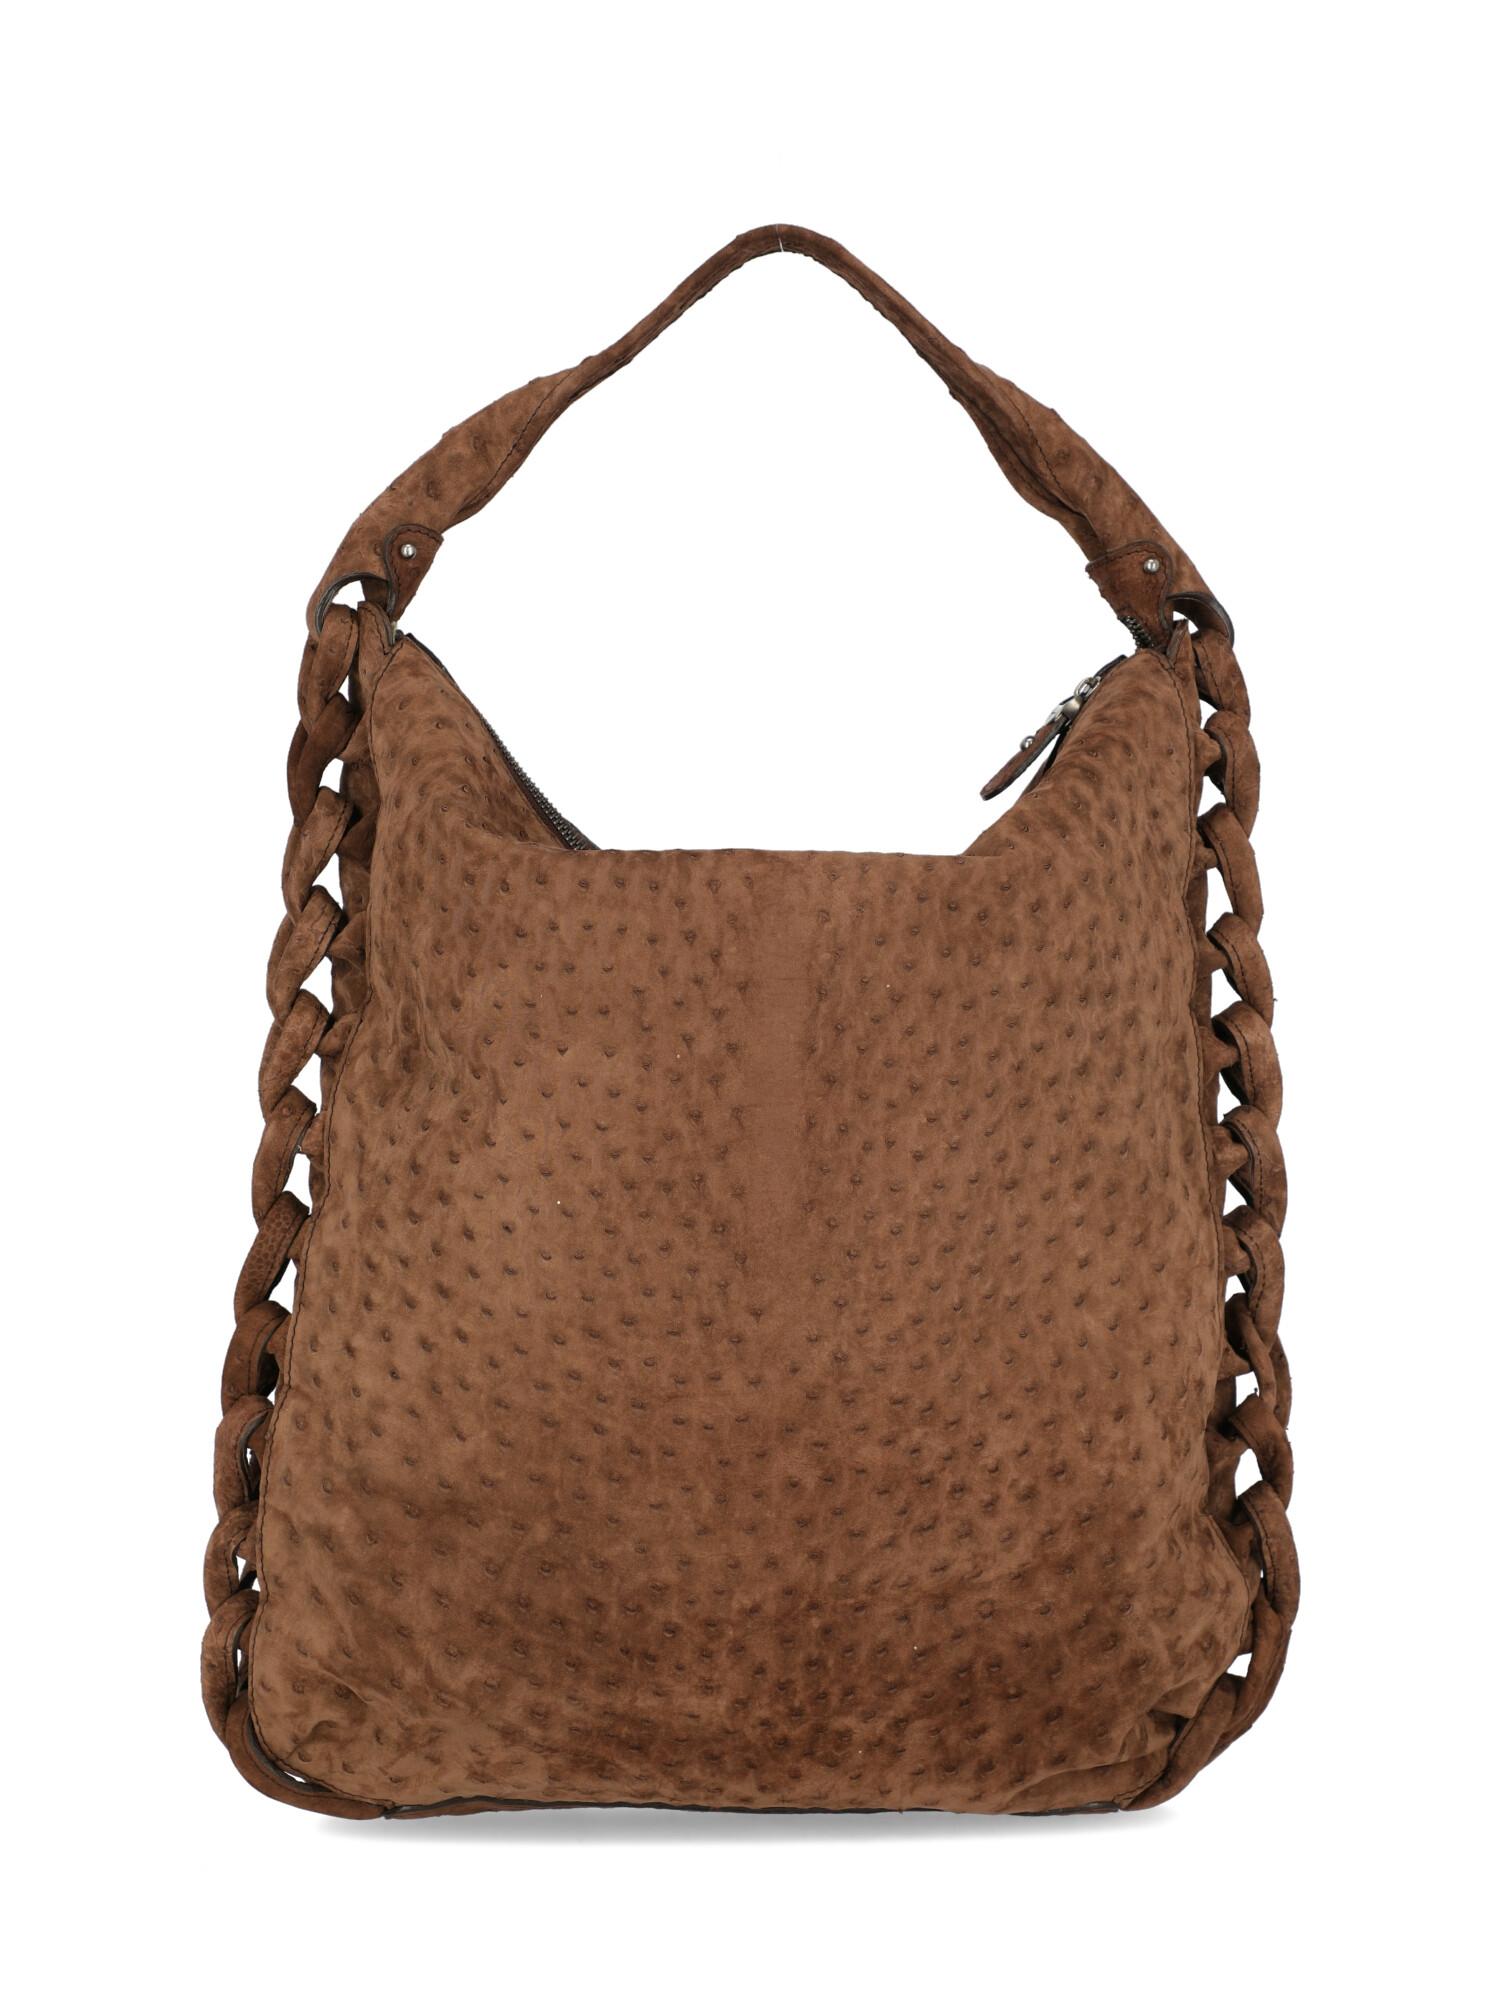 Women's Salvatore Ferragamo Woman Handbag Brown Leather For Sale